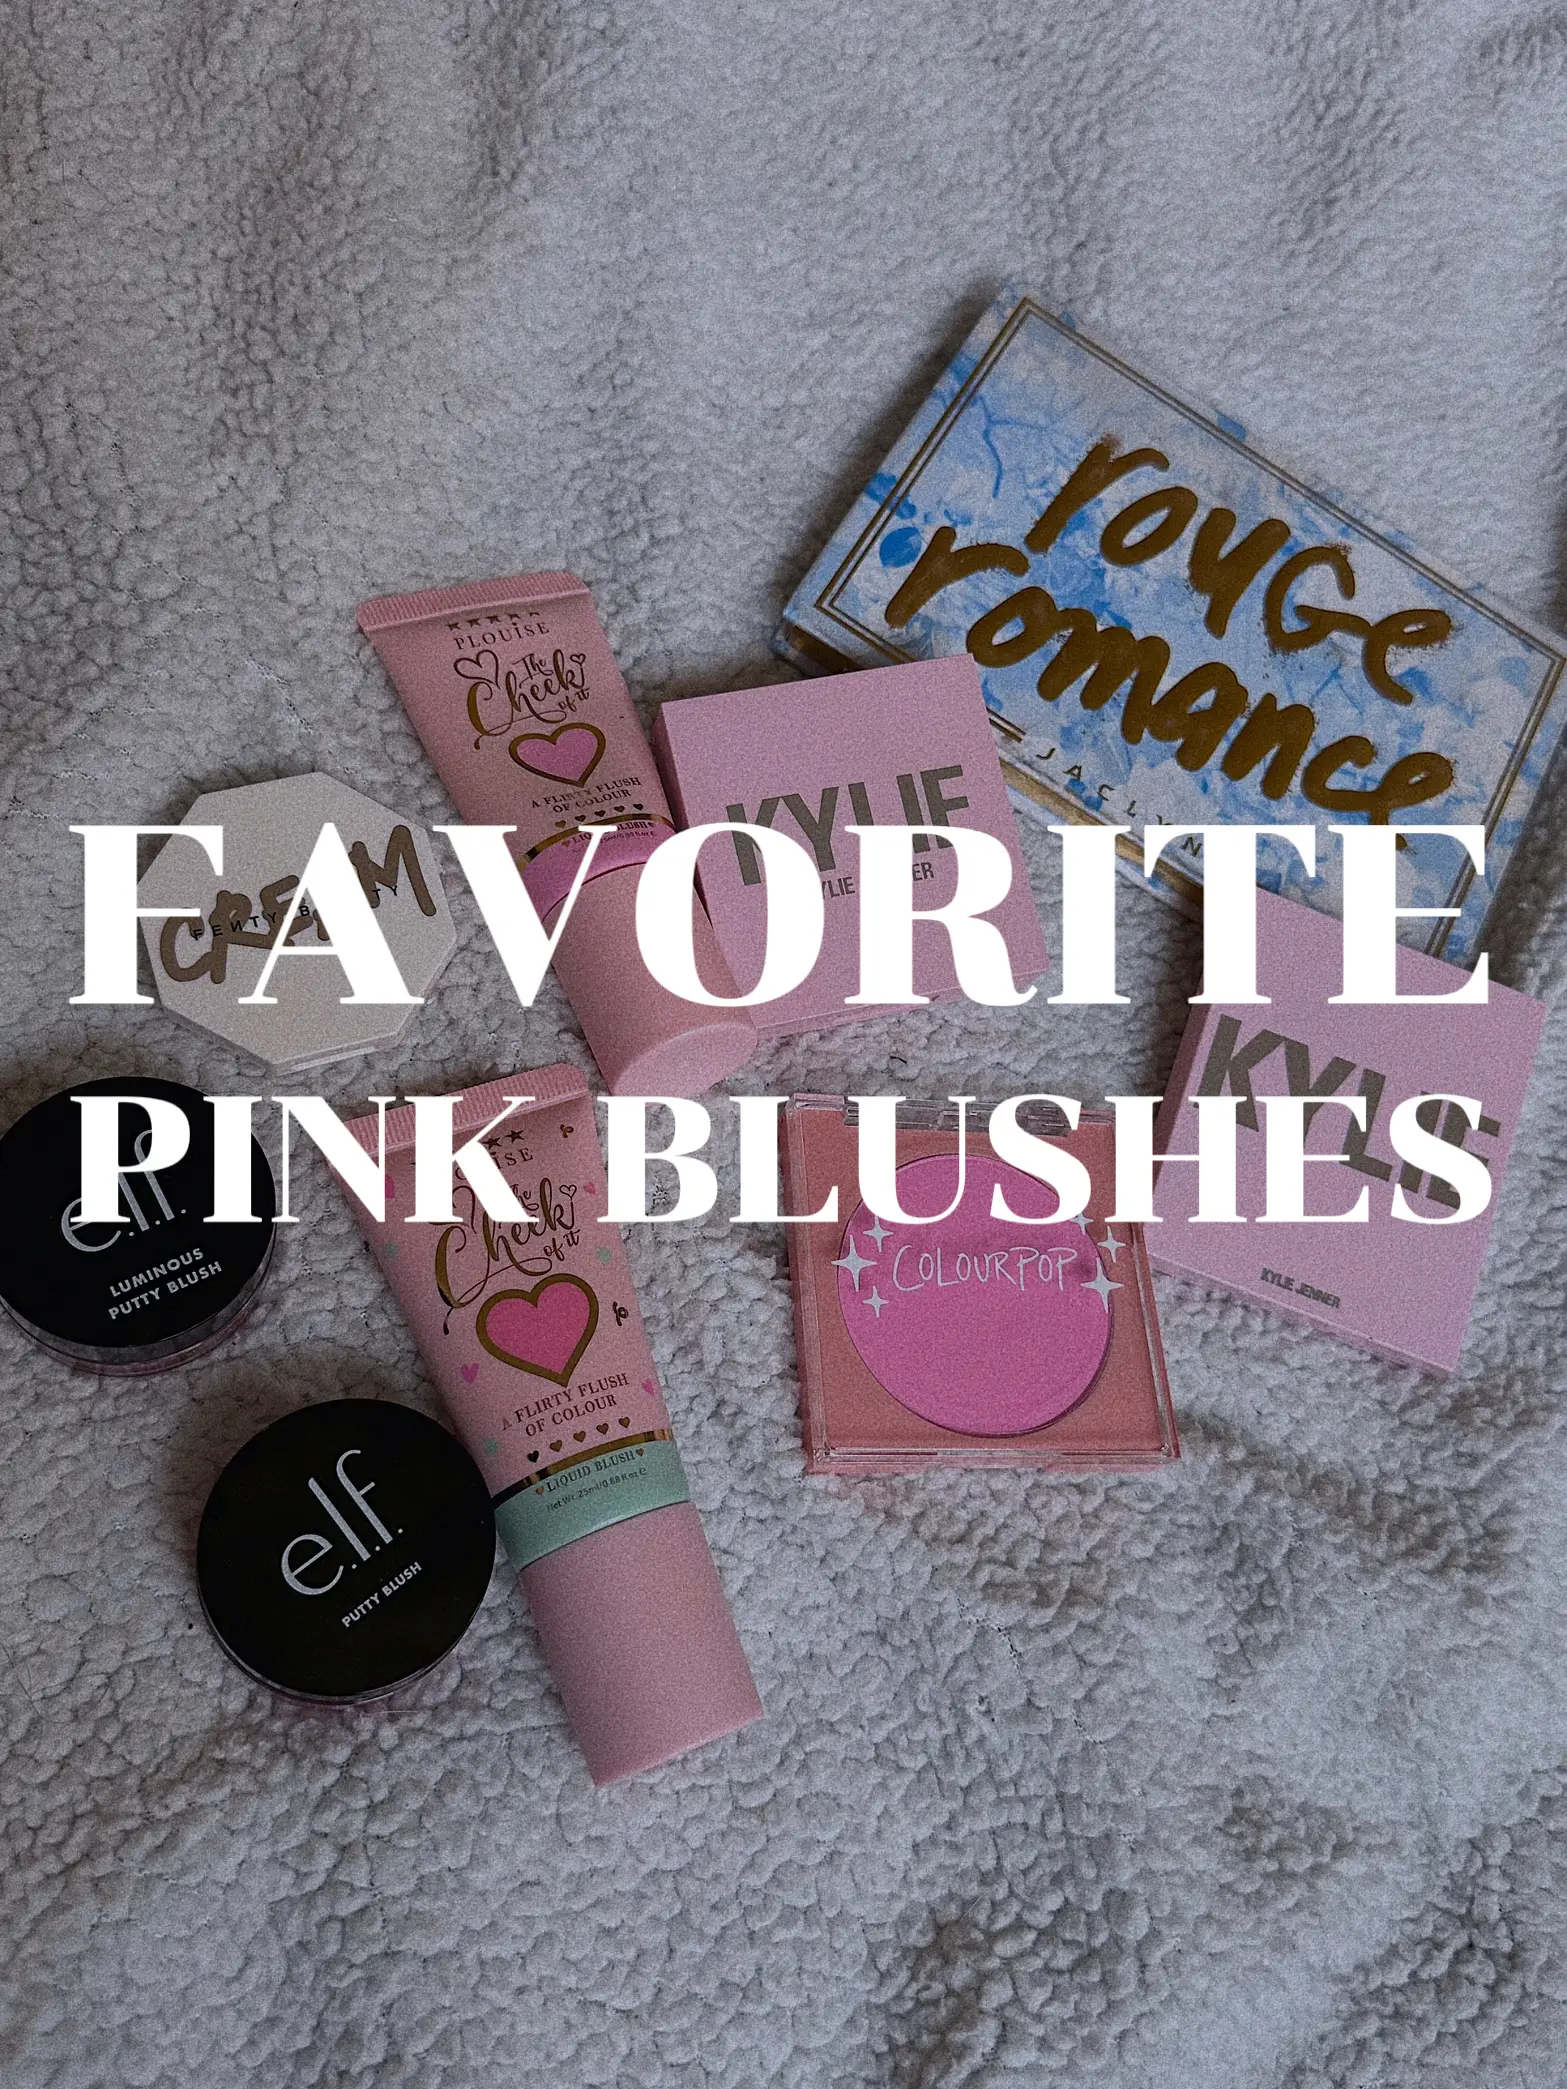 The prettiest pink blush ever 💗 @plmakeupacademy #plouise #pinkblush